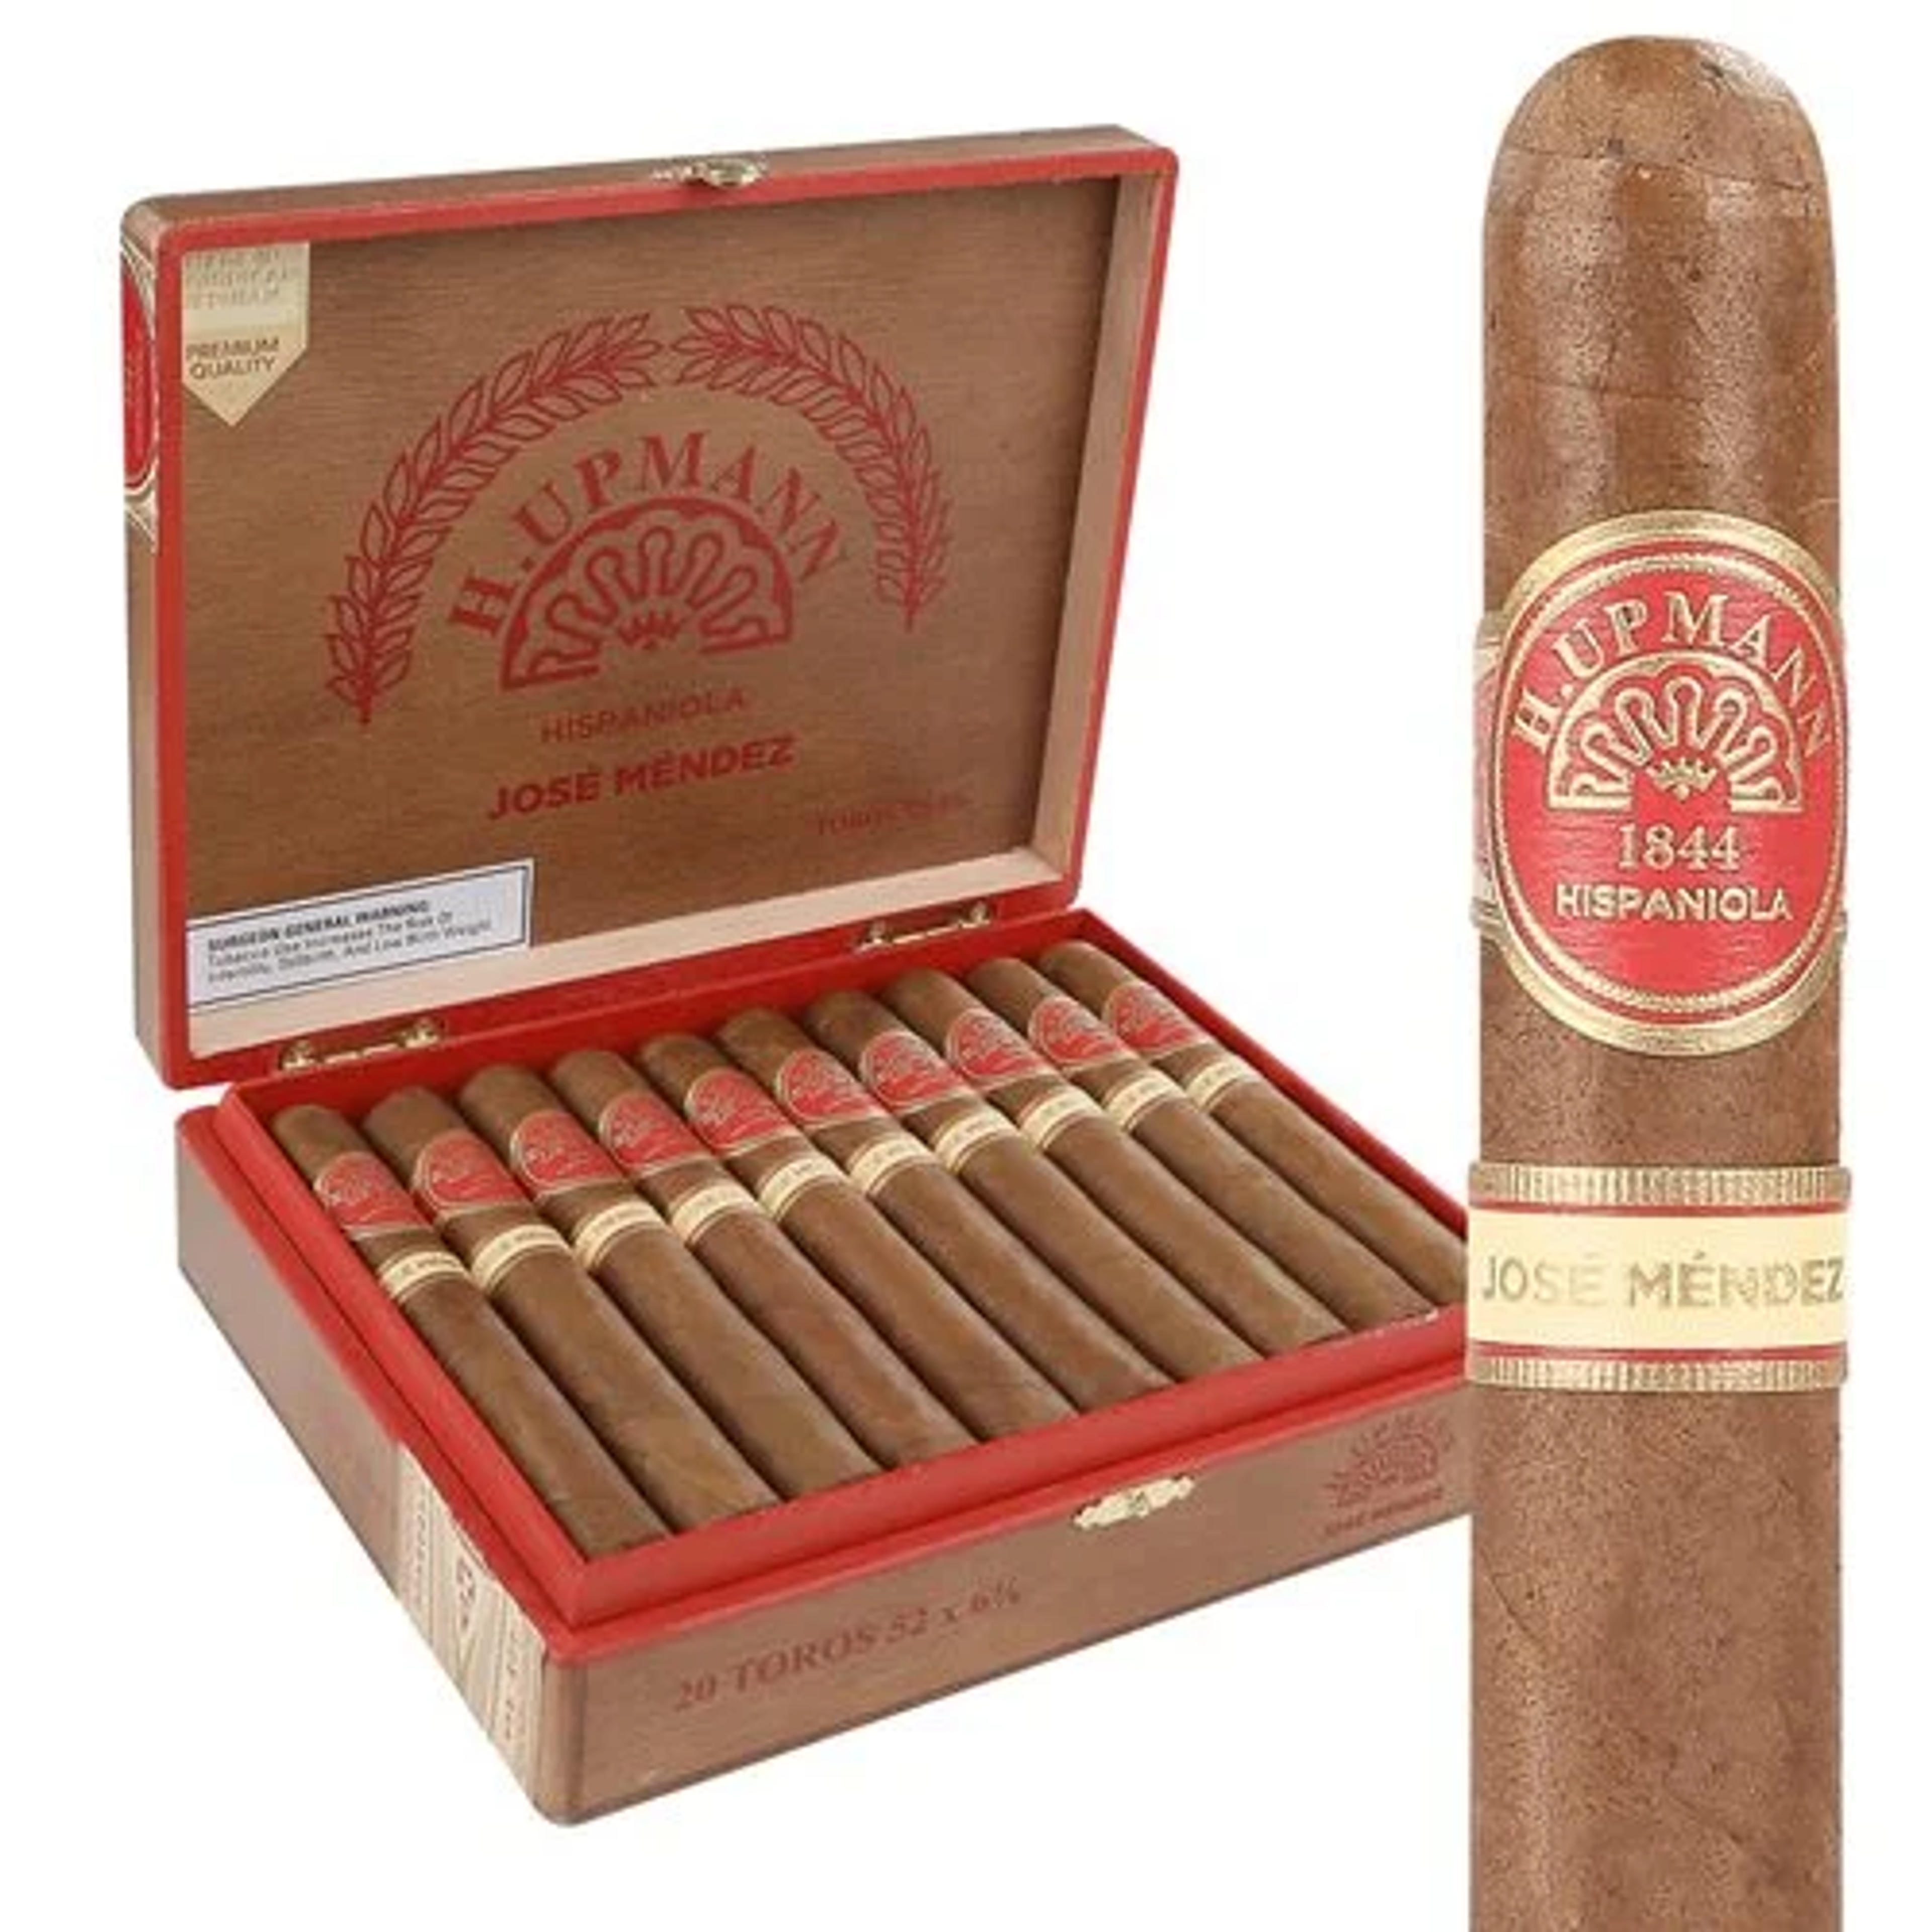 H. Upmann Hispaniola by Jose Mendez - Cigars International